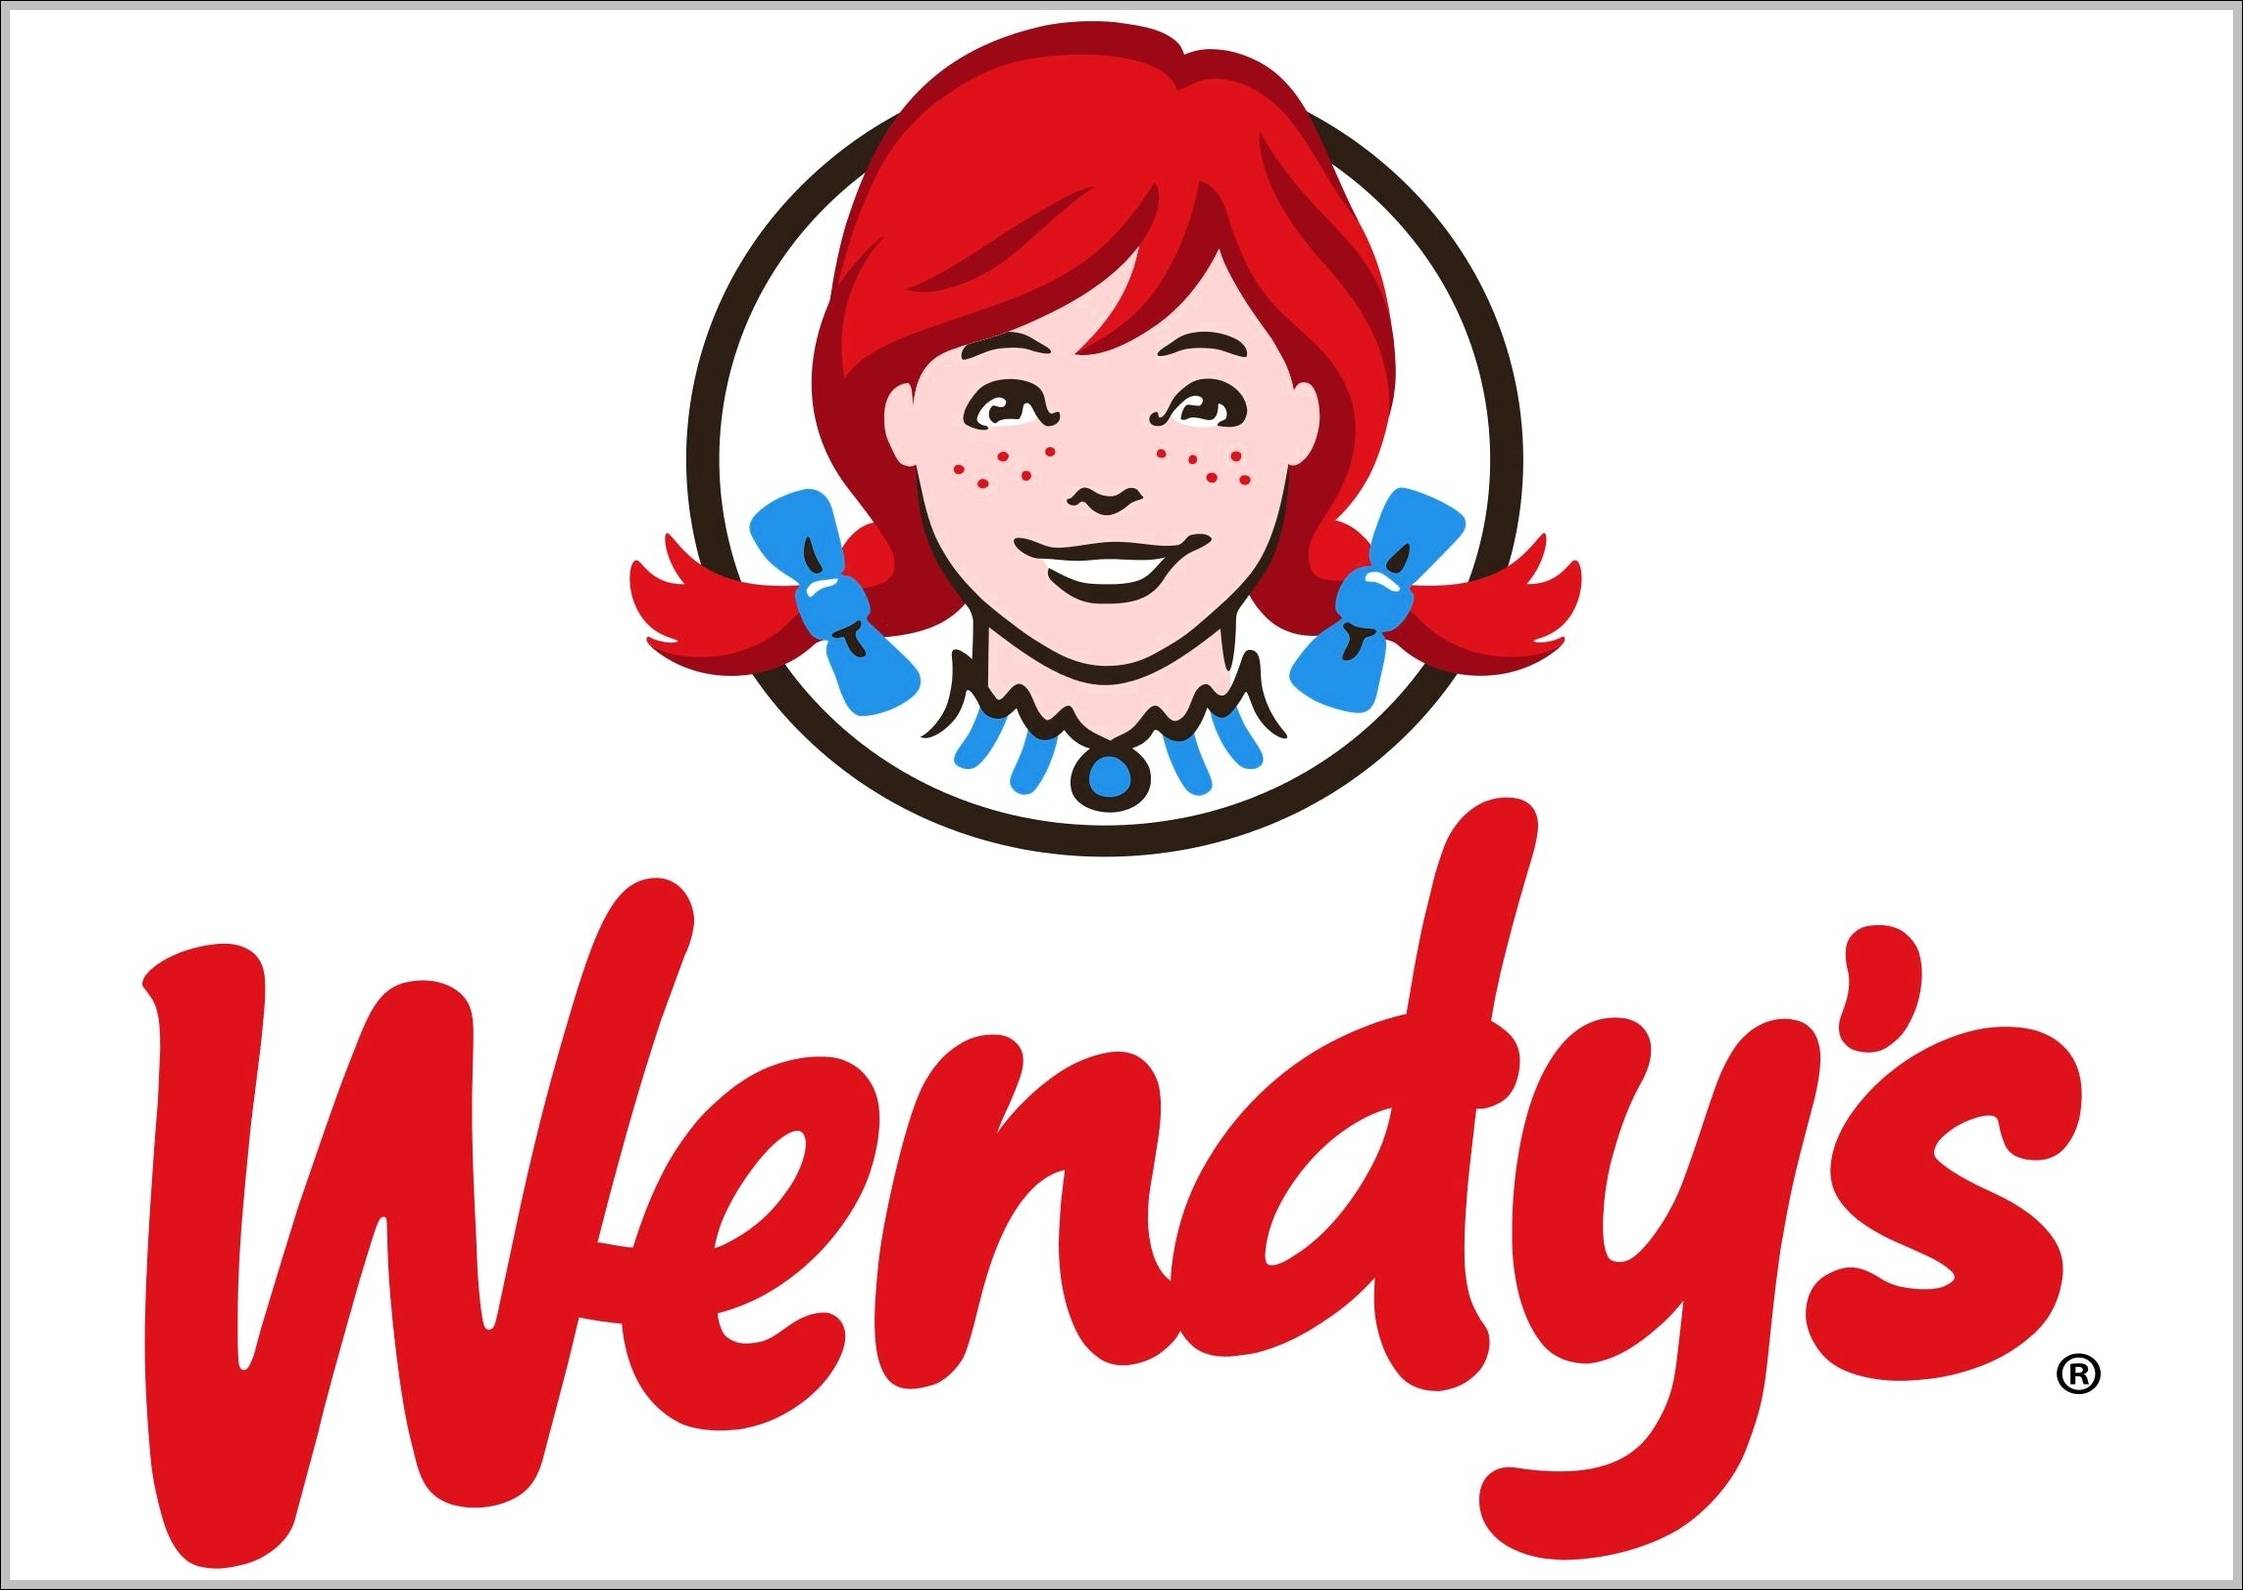 Wendys logo 2012